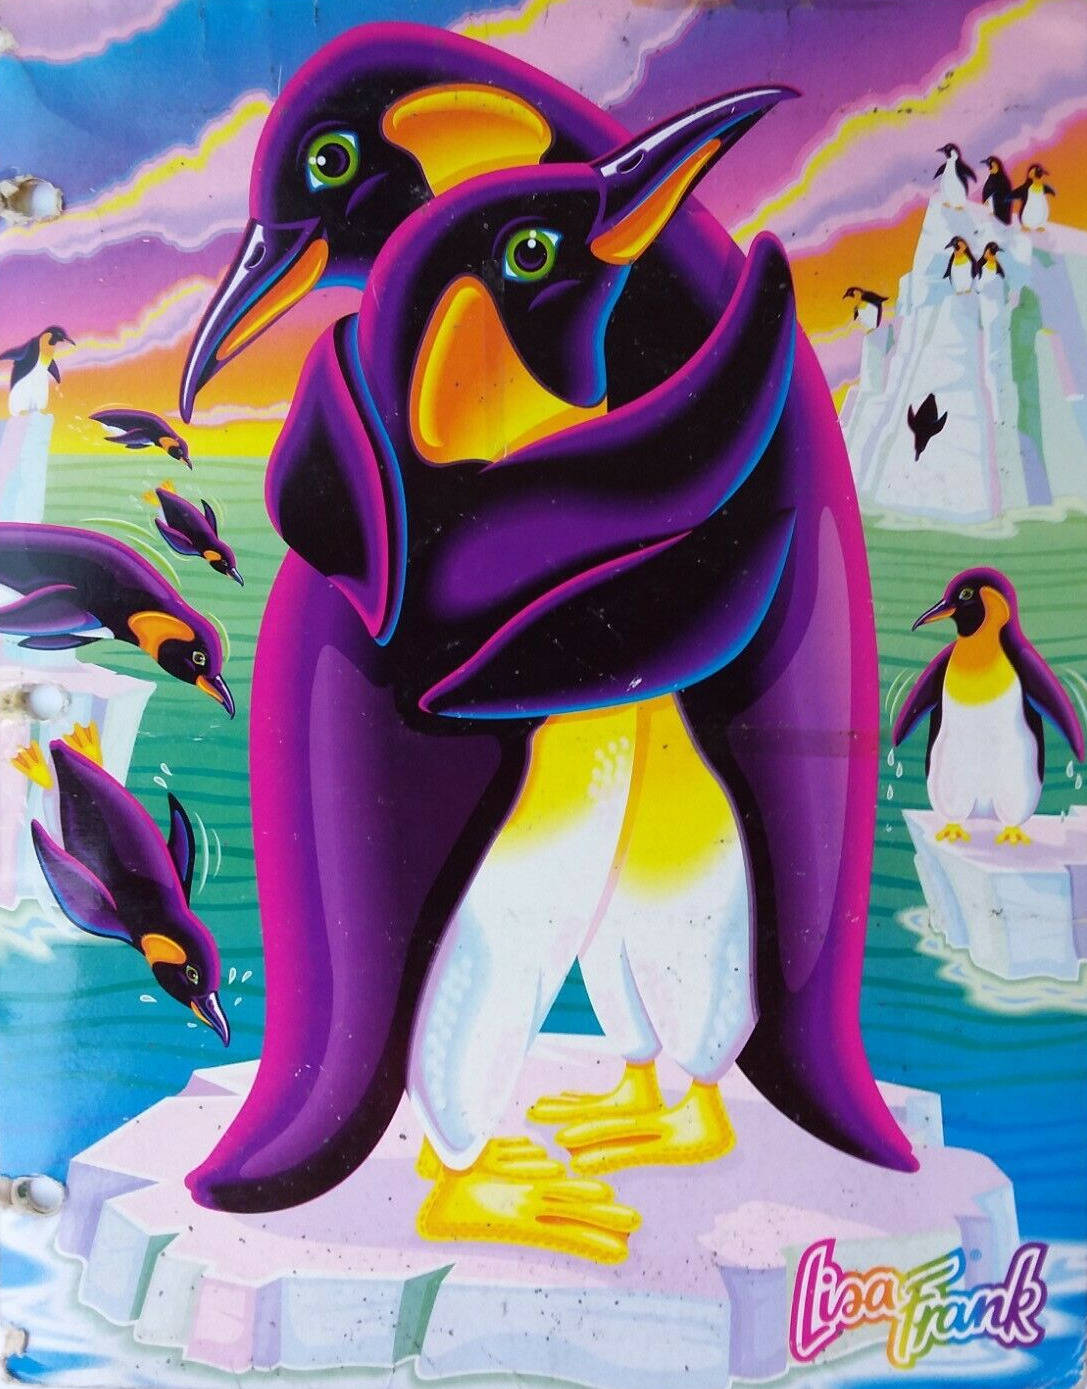 Lively and Colorful Lisa Frank Penguin Illustration Wallpaper